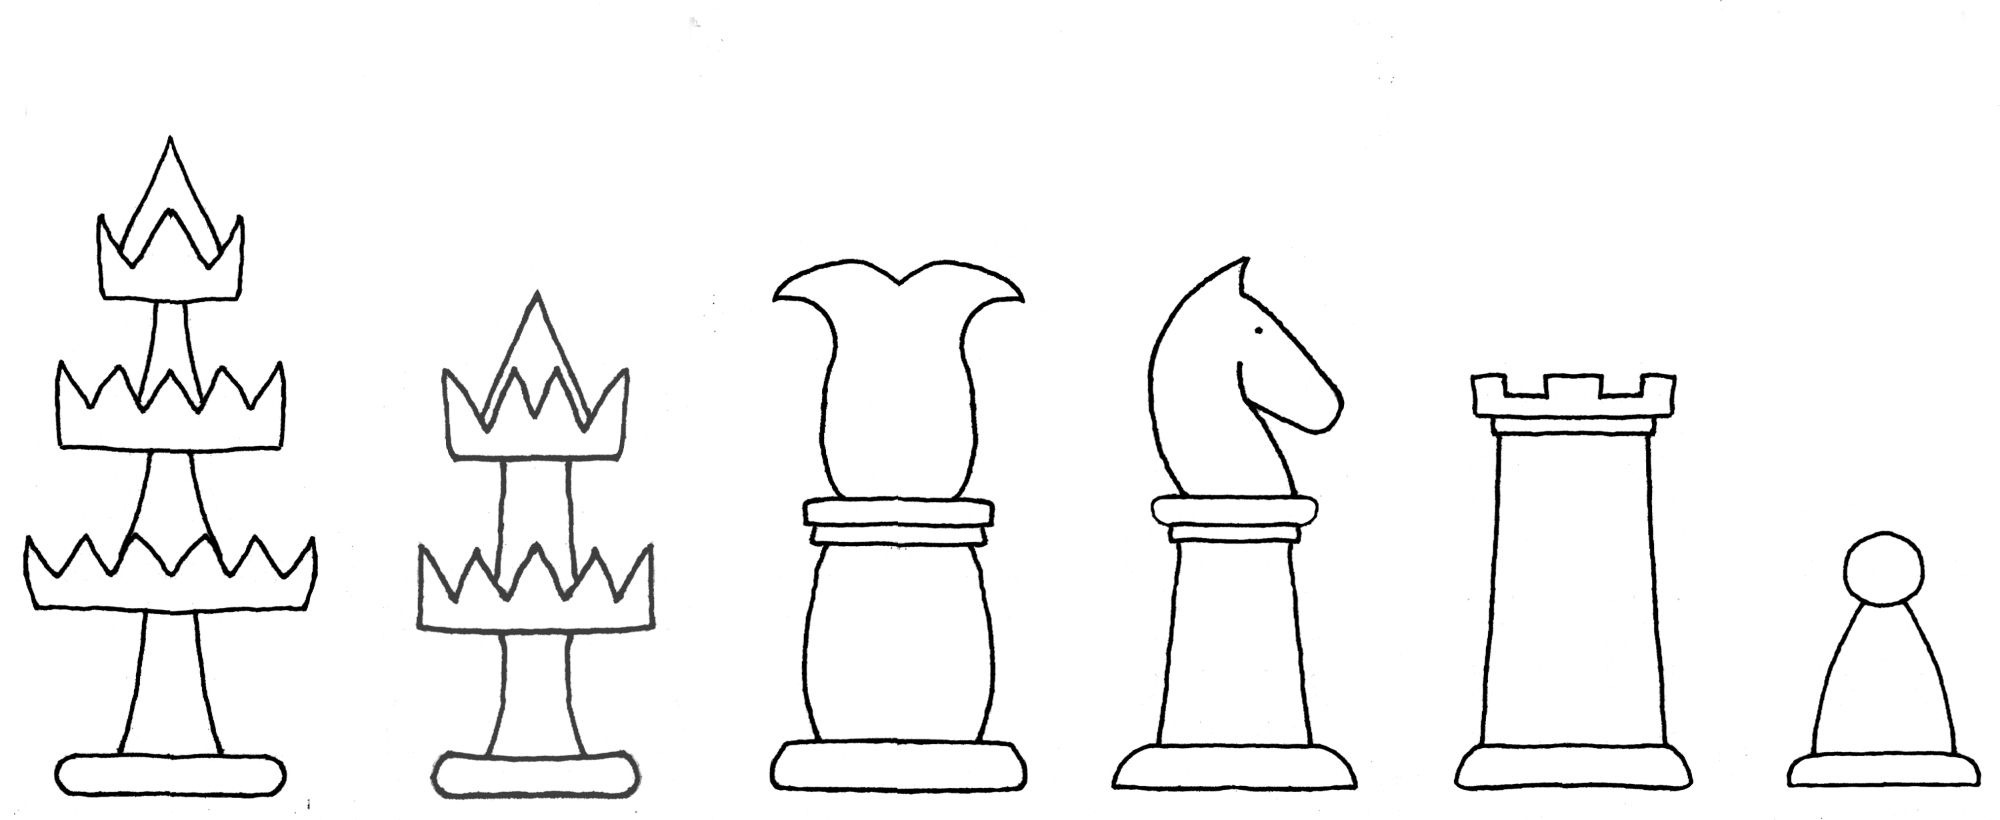  Interpretive diagram of seventeenth century Selenus chess set